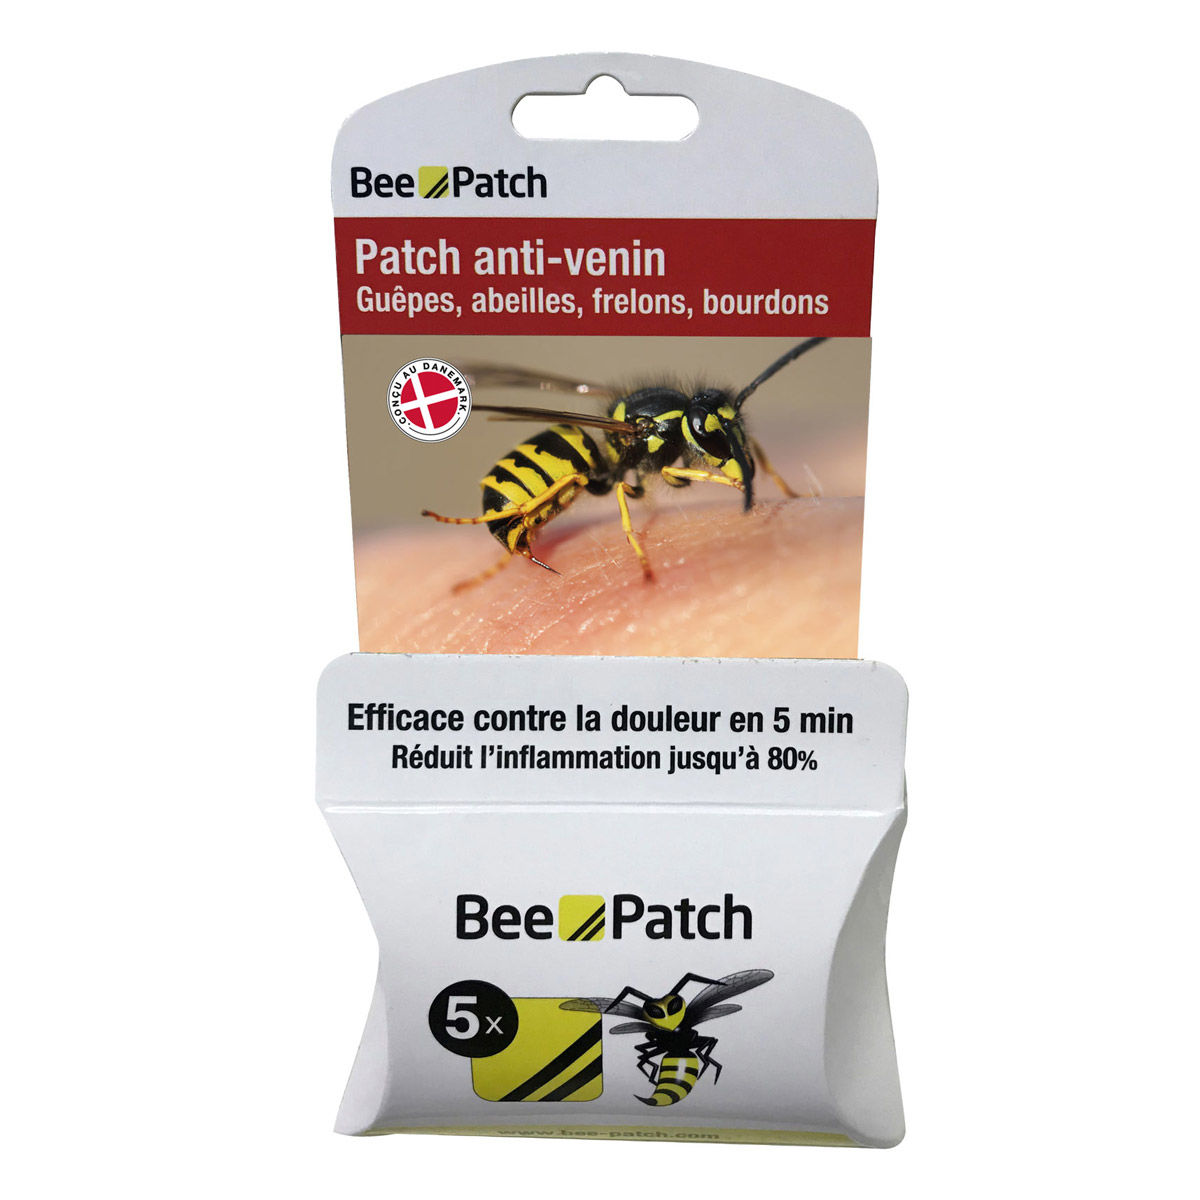 Bee-Patch anti-venom patch x 5